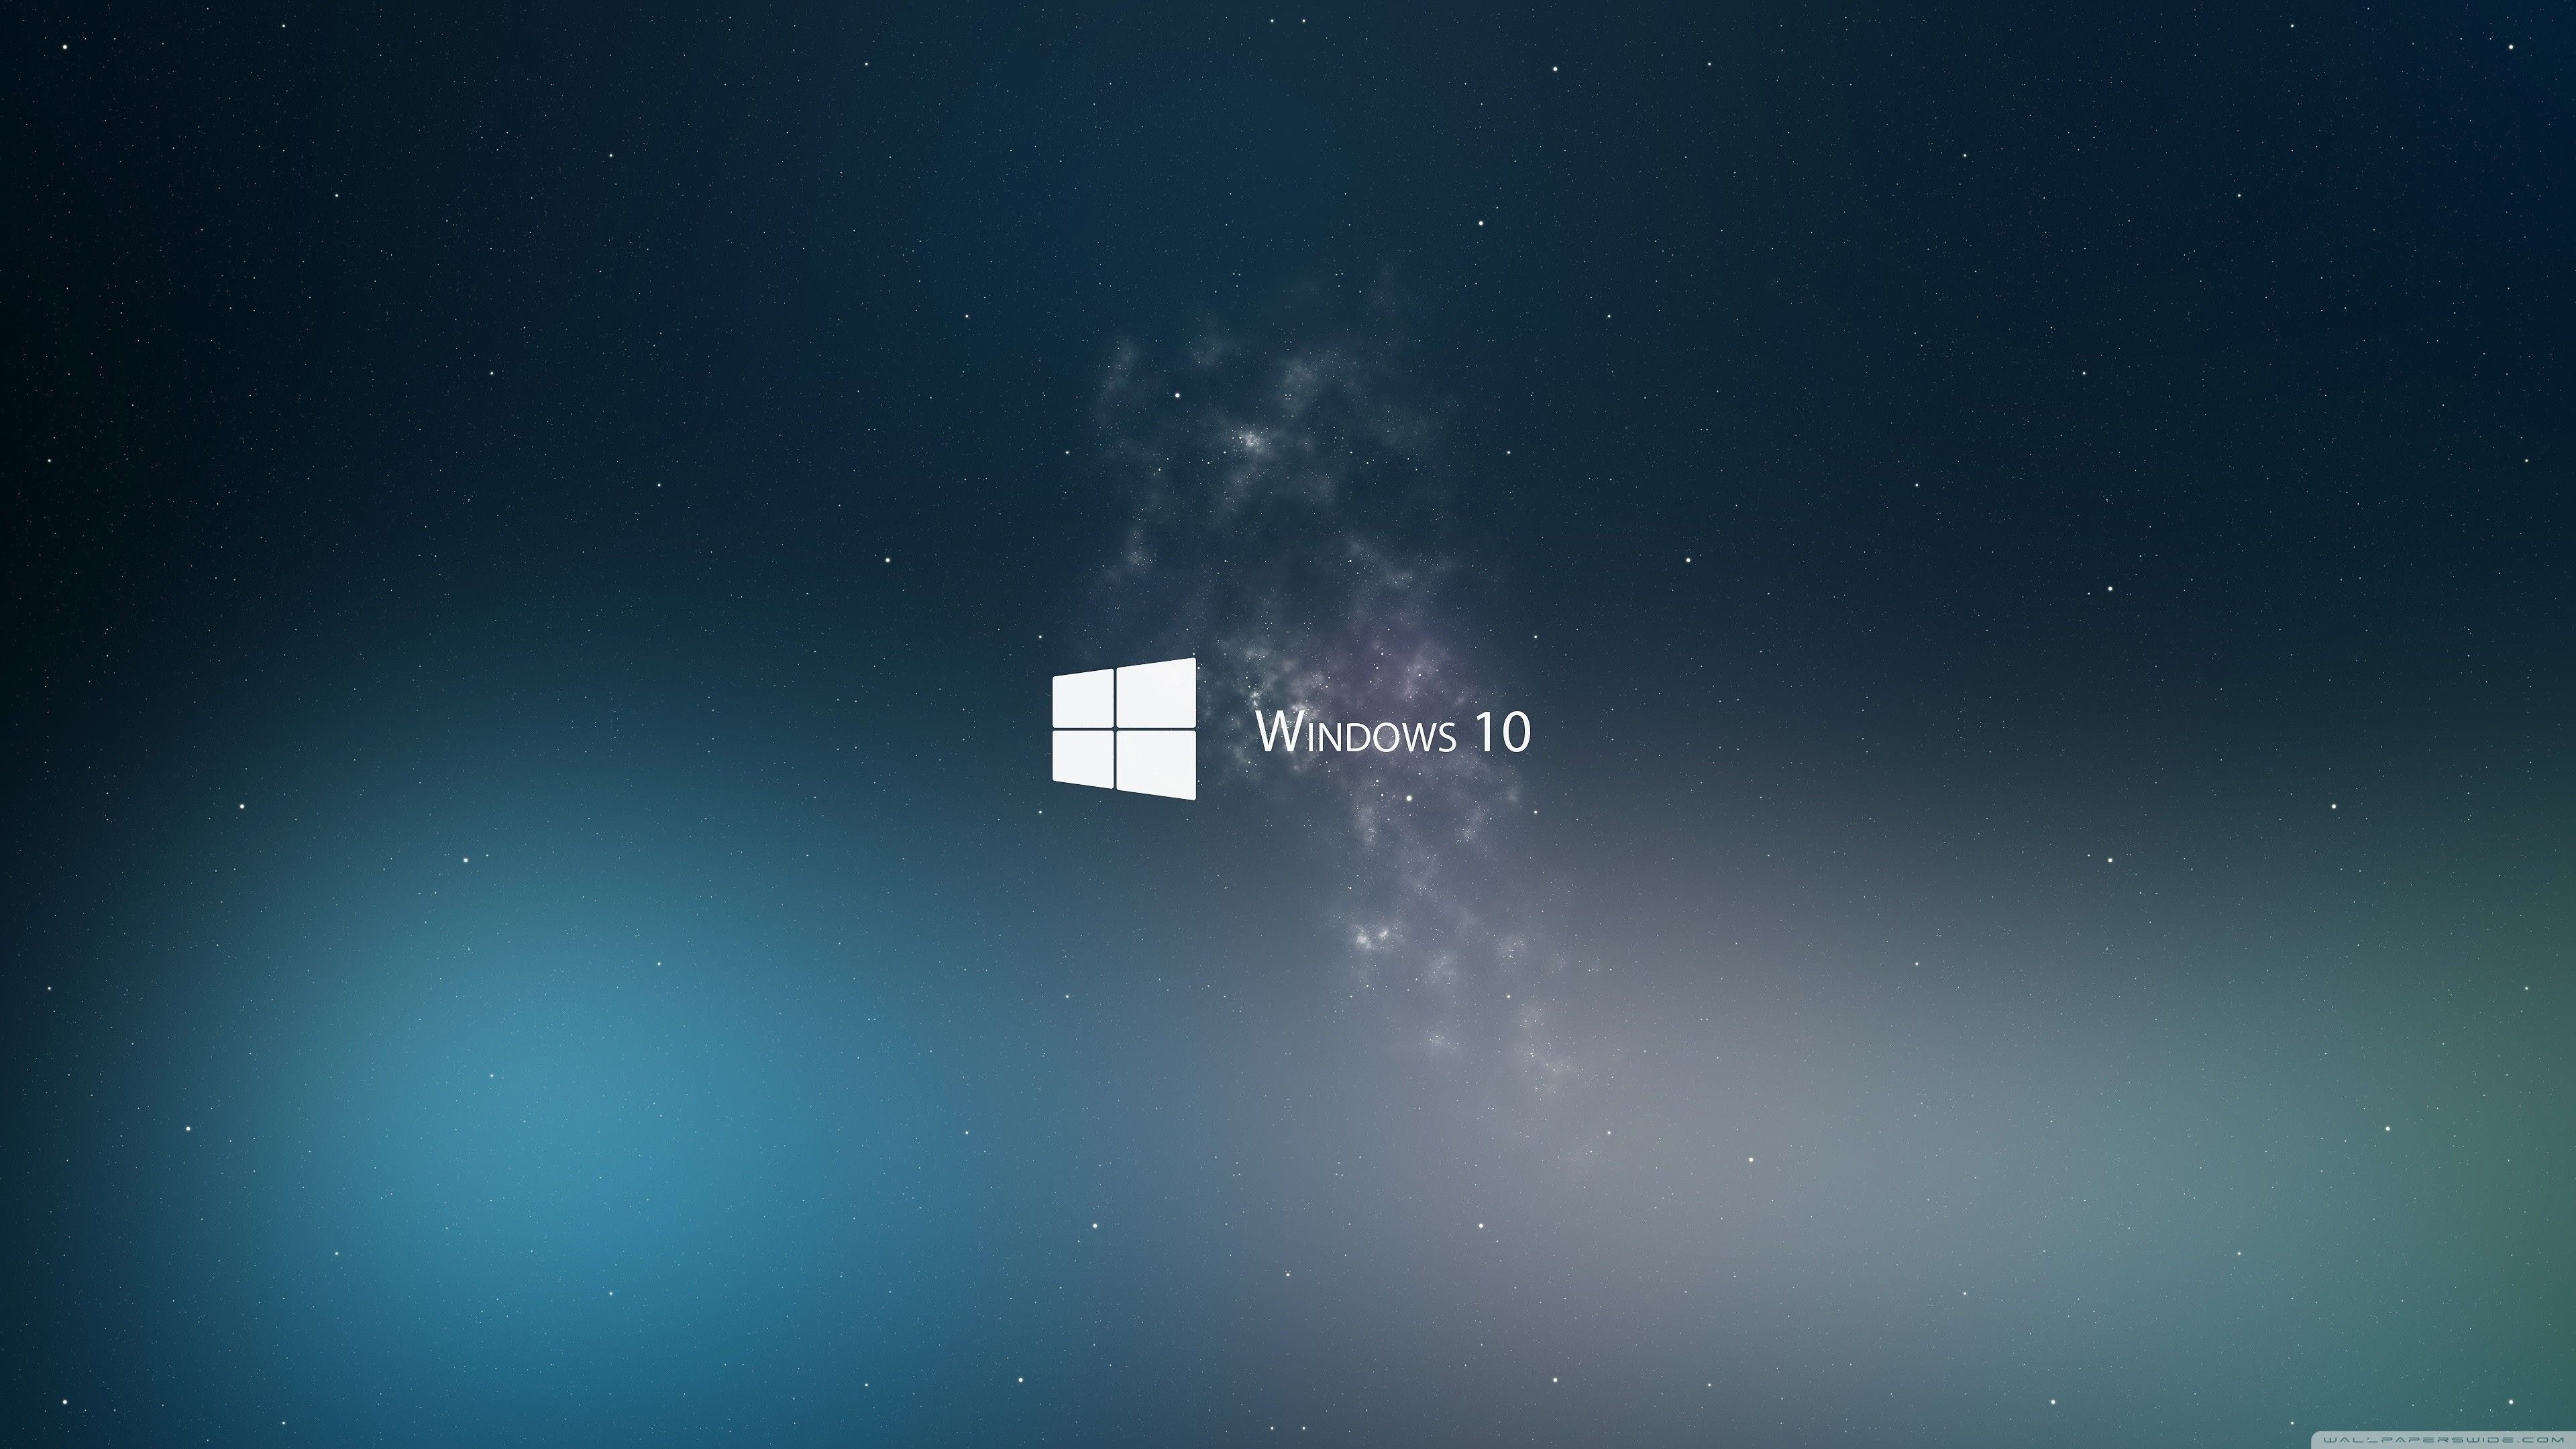 Windows 10 Desktop Wallpaper background picture